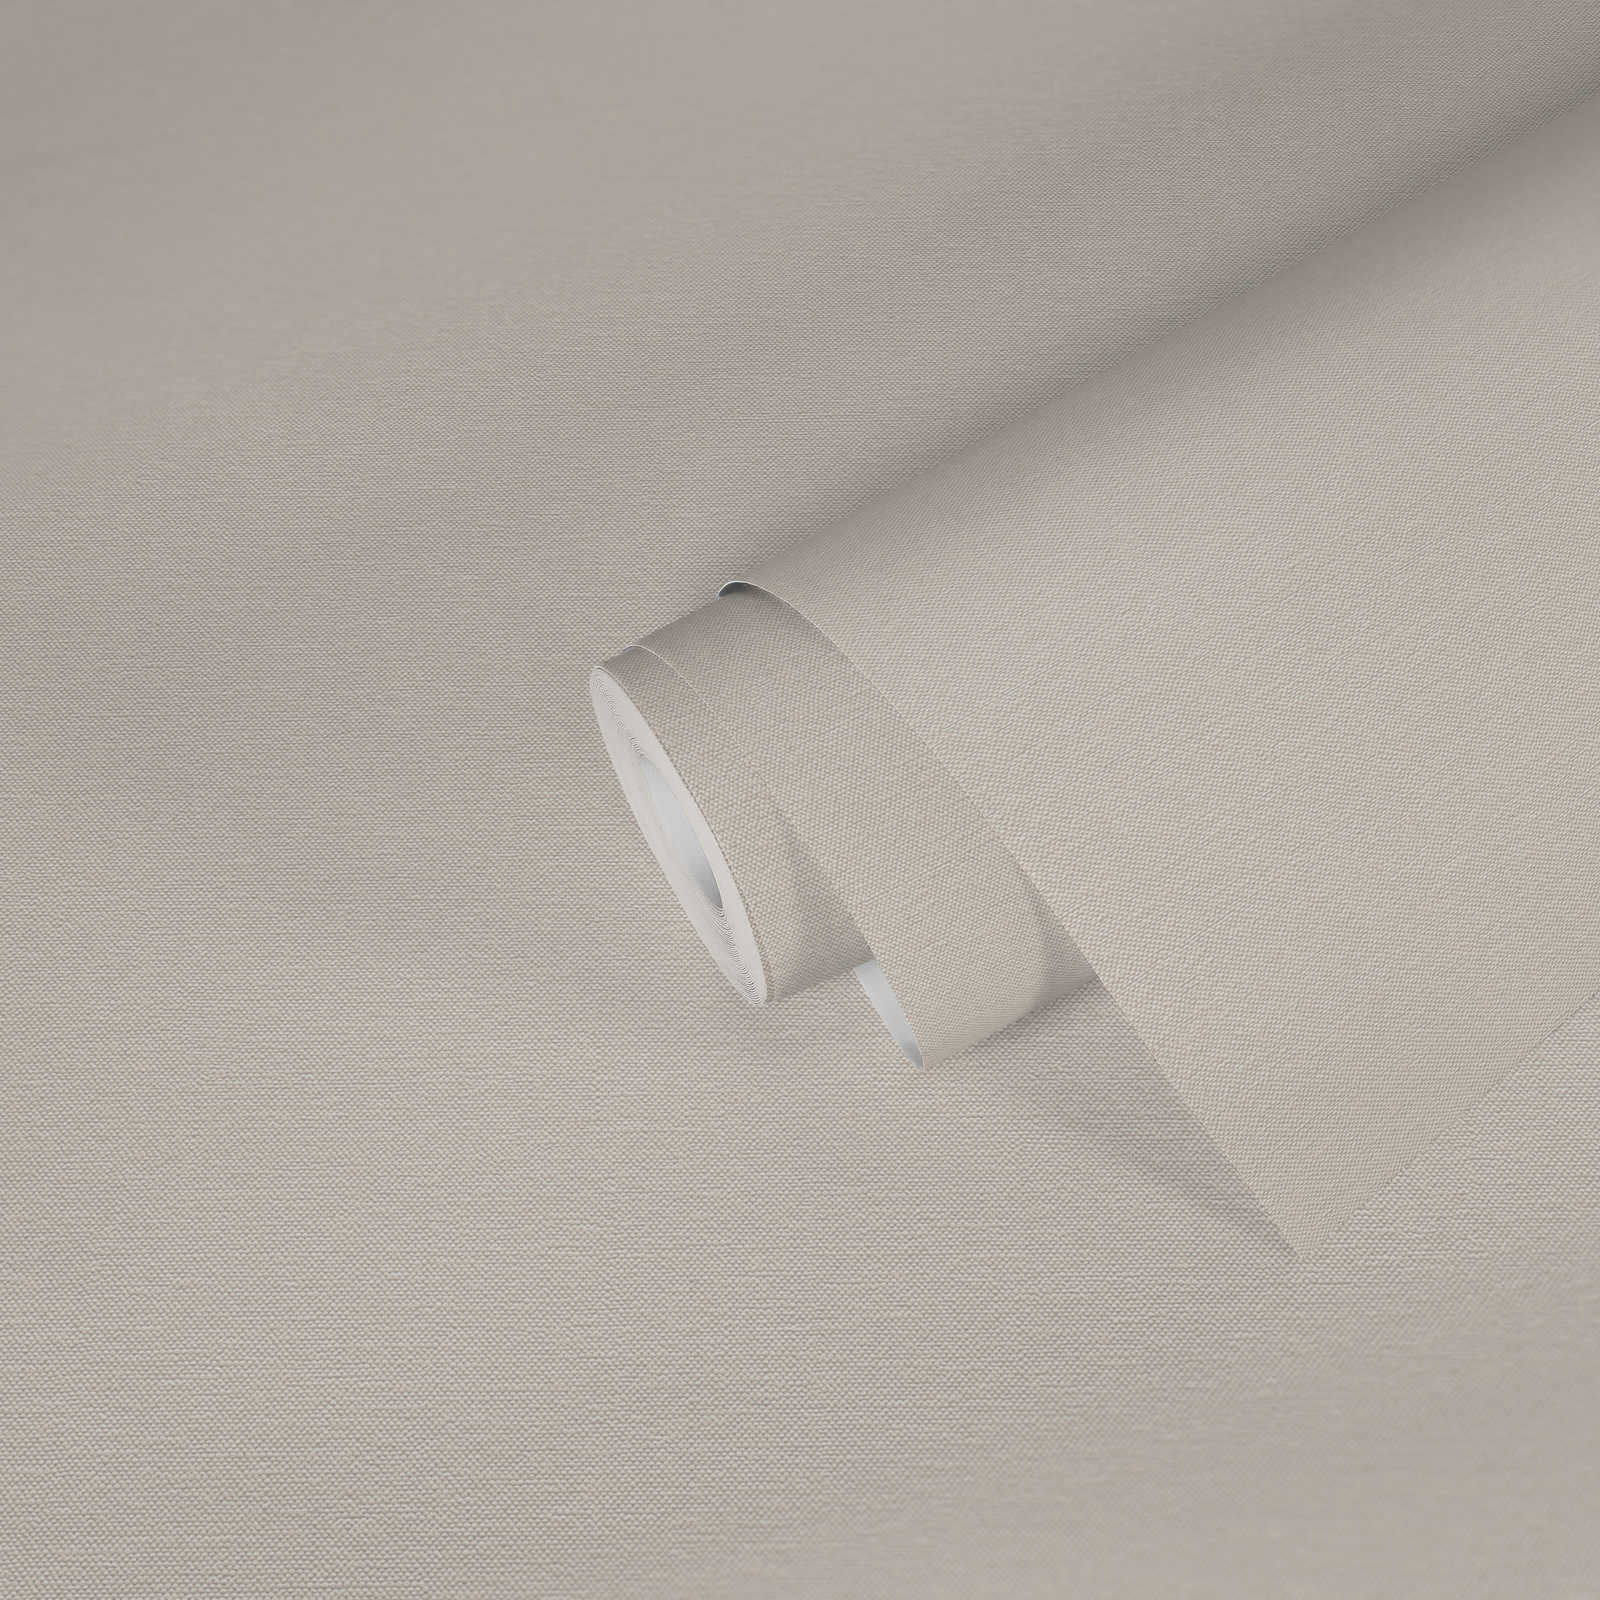             wallpaper plain with fabric structure matt - white
        